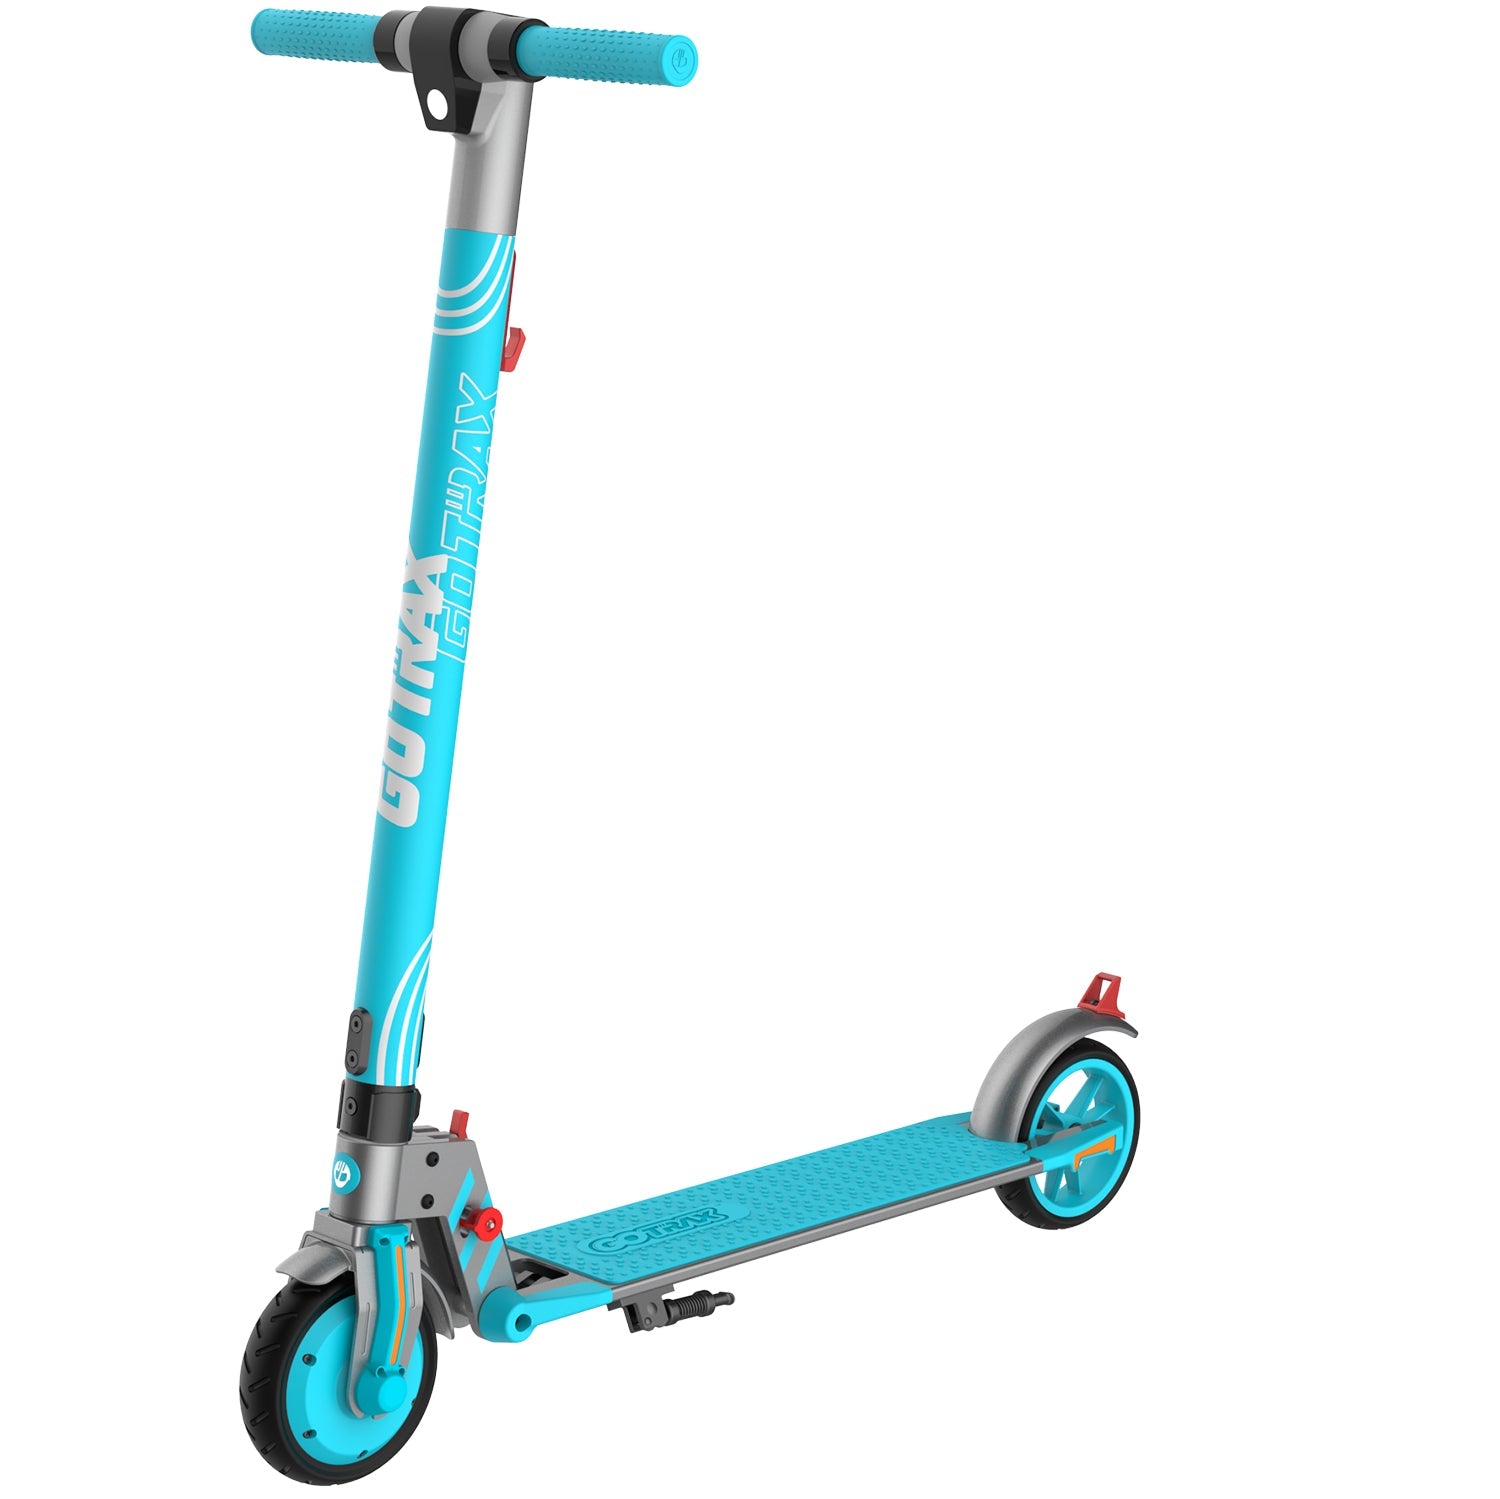 Bicicleta Eléctrica Infantil Gotrax 250w, 15,5 Mph, Rueda